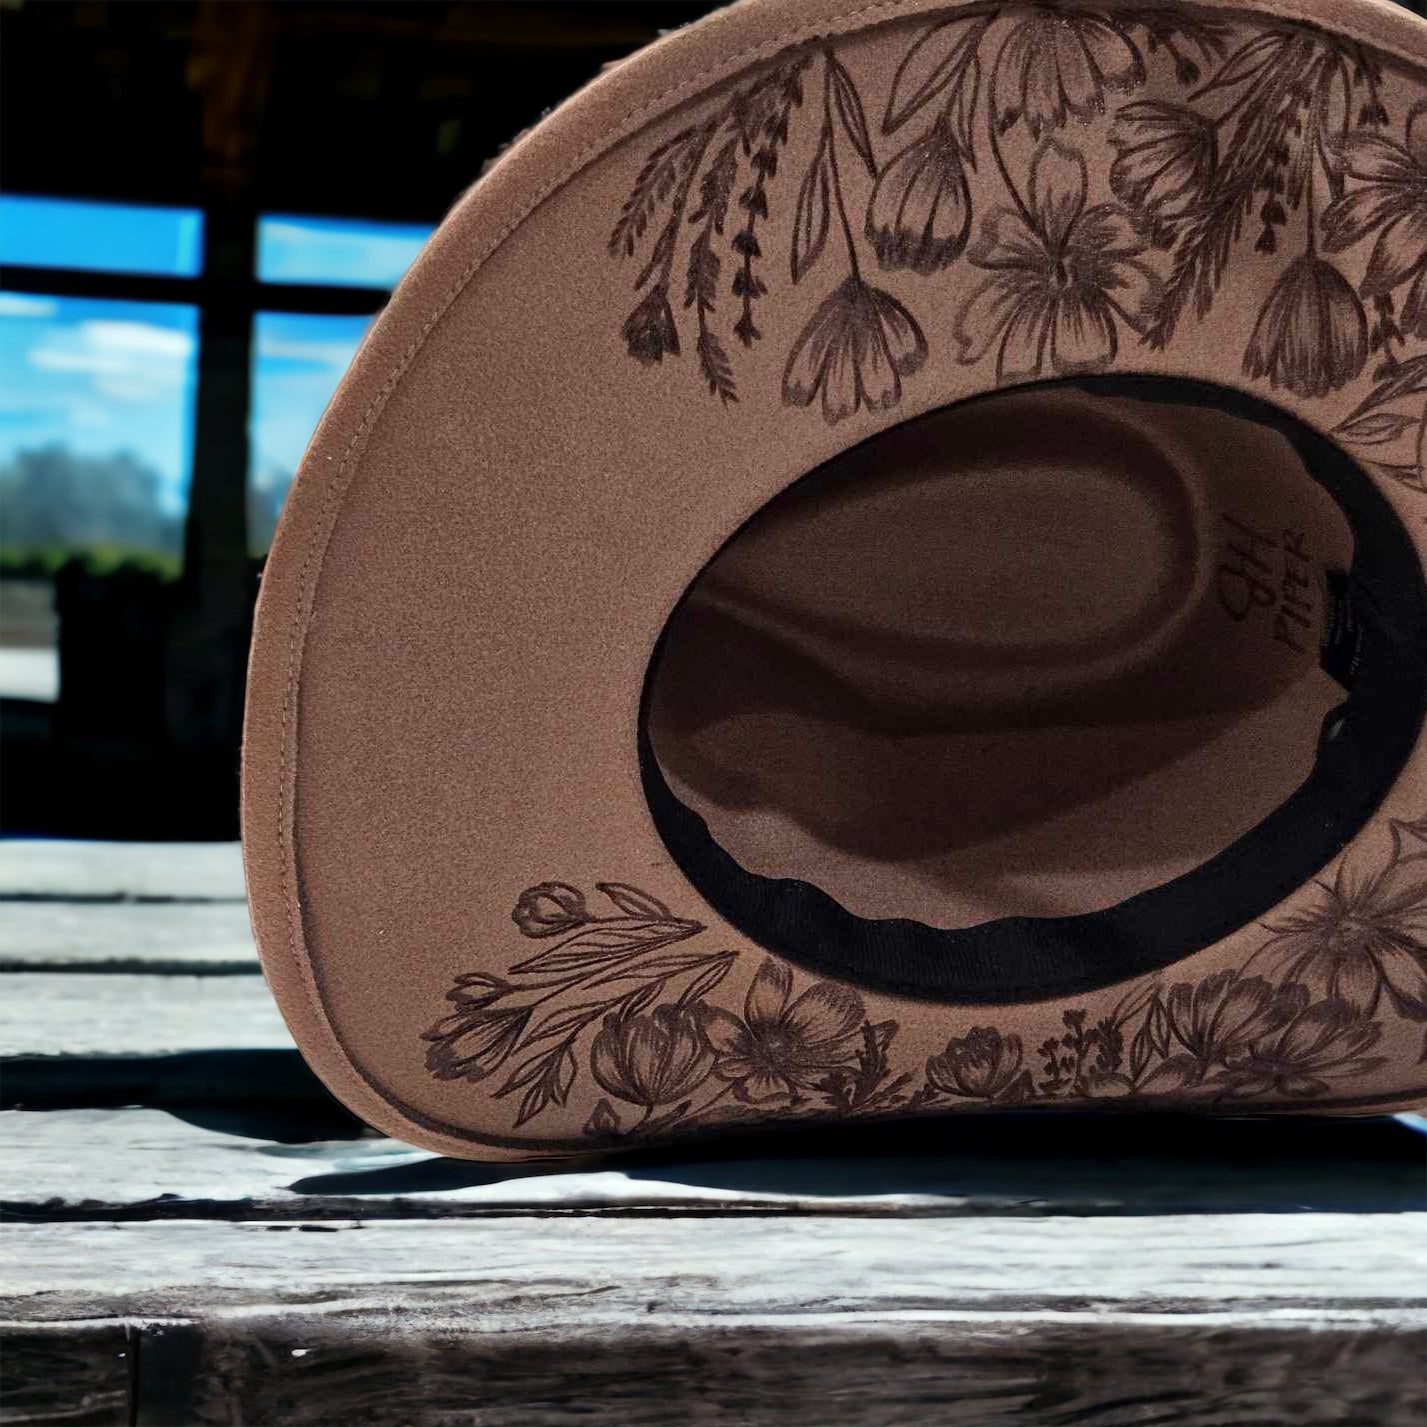 Annie -Burned Cowboy Style Hat